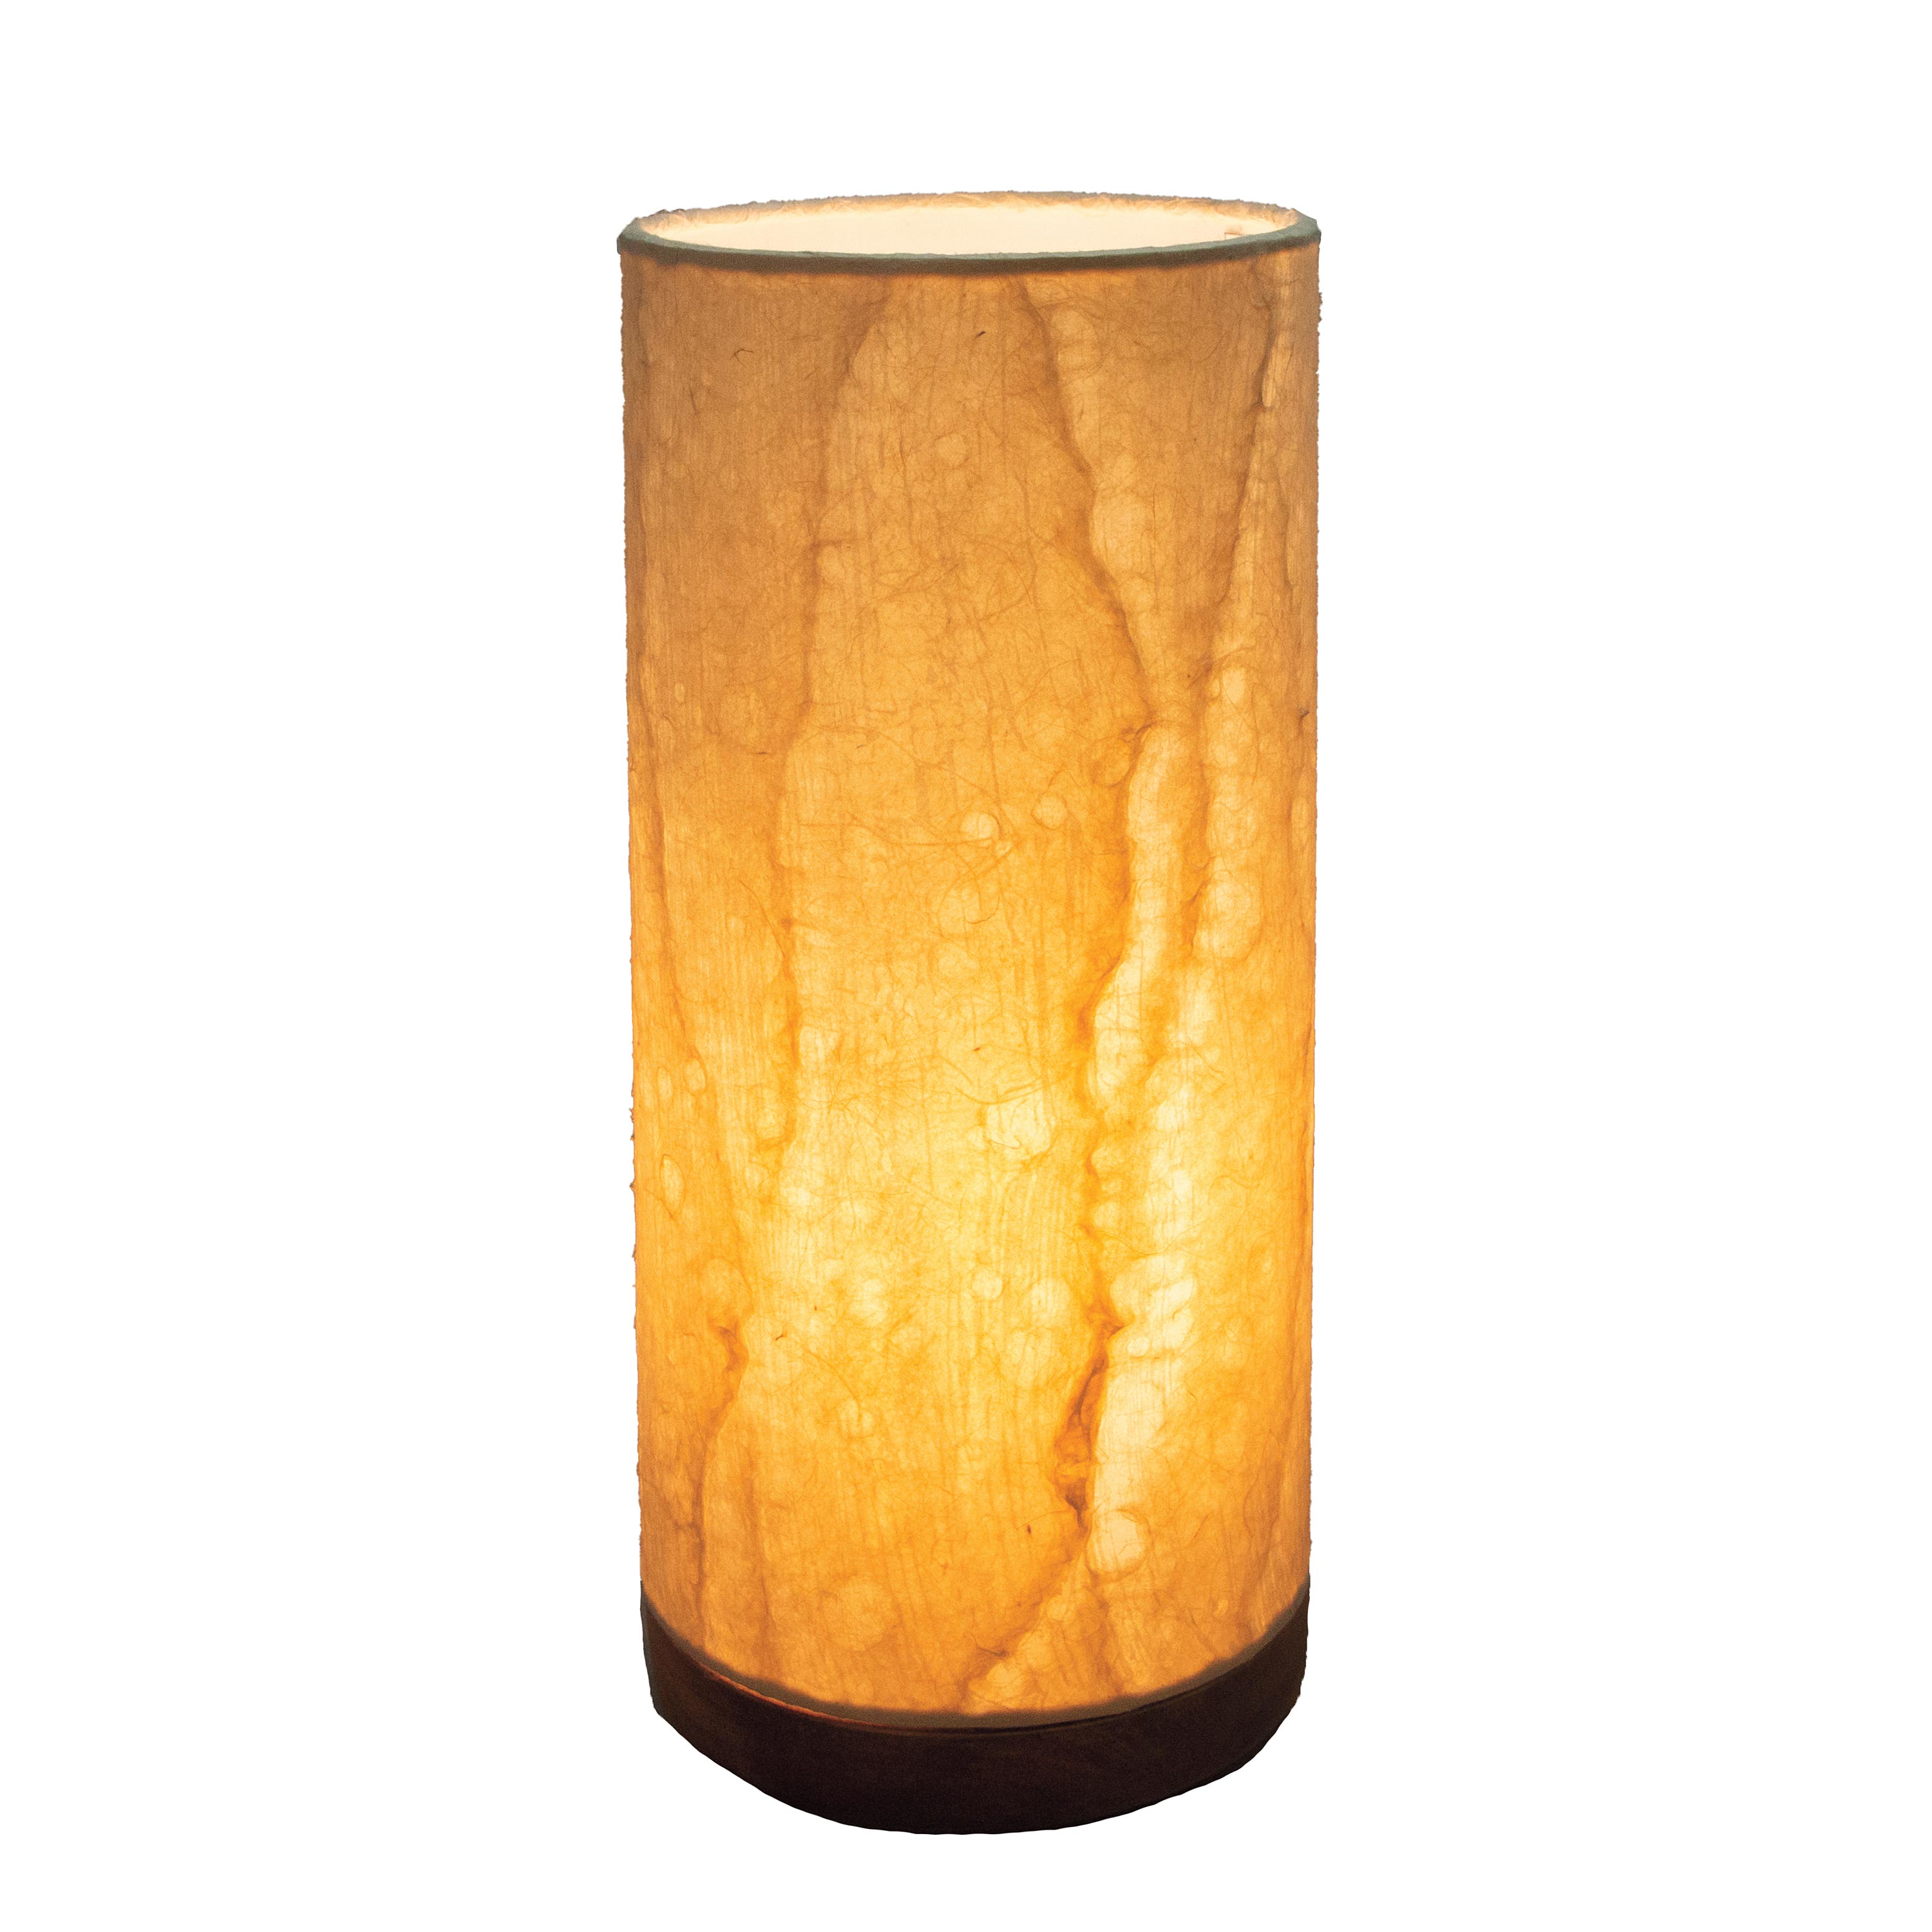 Recycled Paper Lamp on Mango Wood Base swatch image